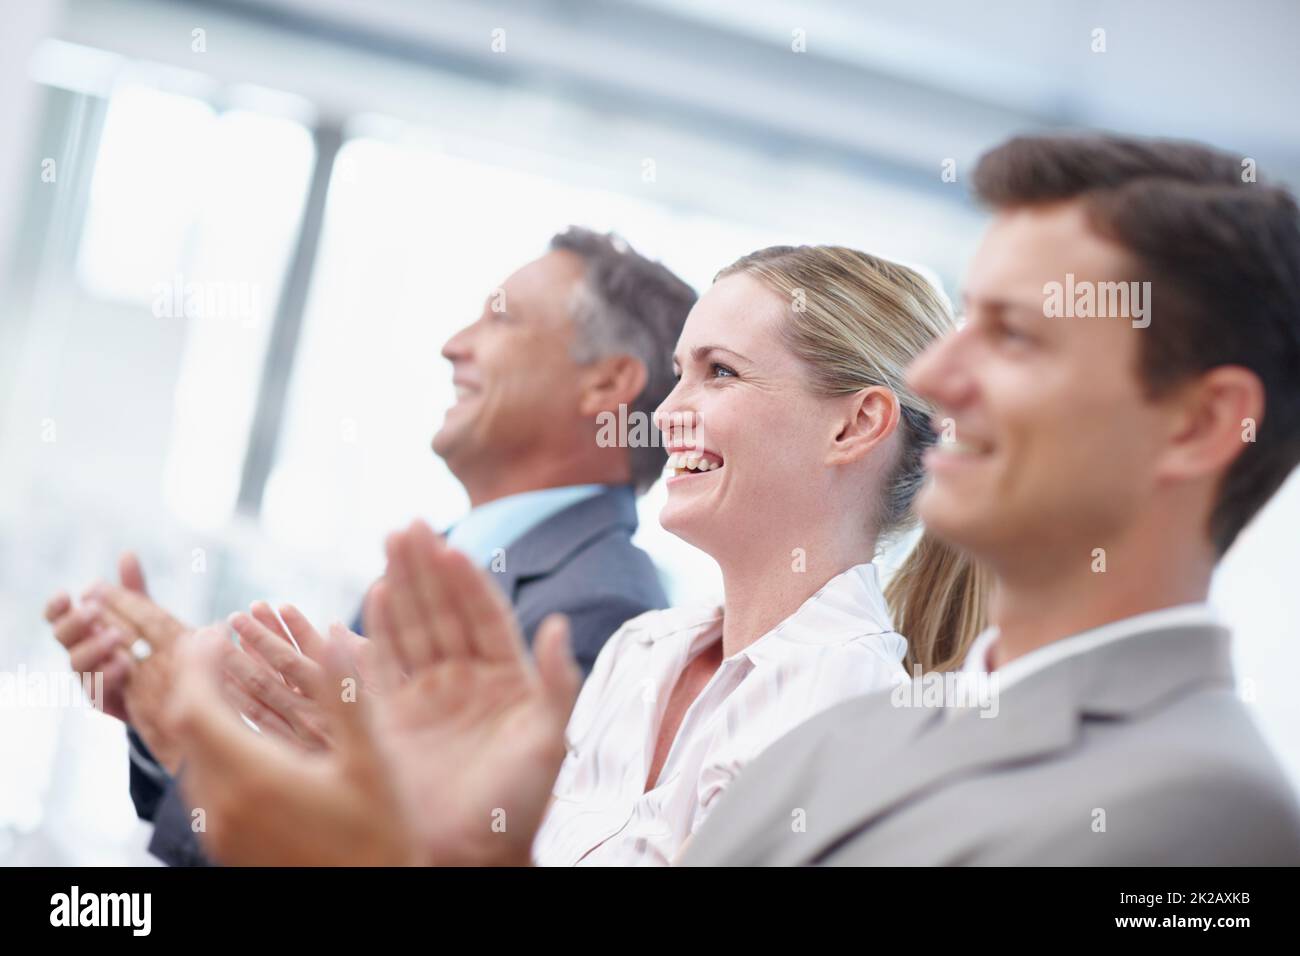 Bravo Brilliant. A trio of businesspeople applauding a brilliant presentation. Stock Photo